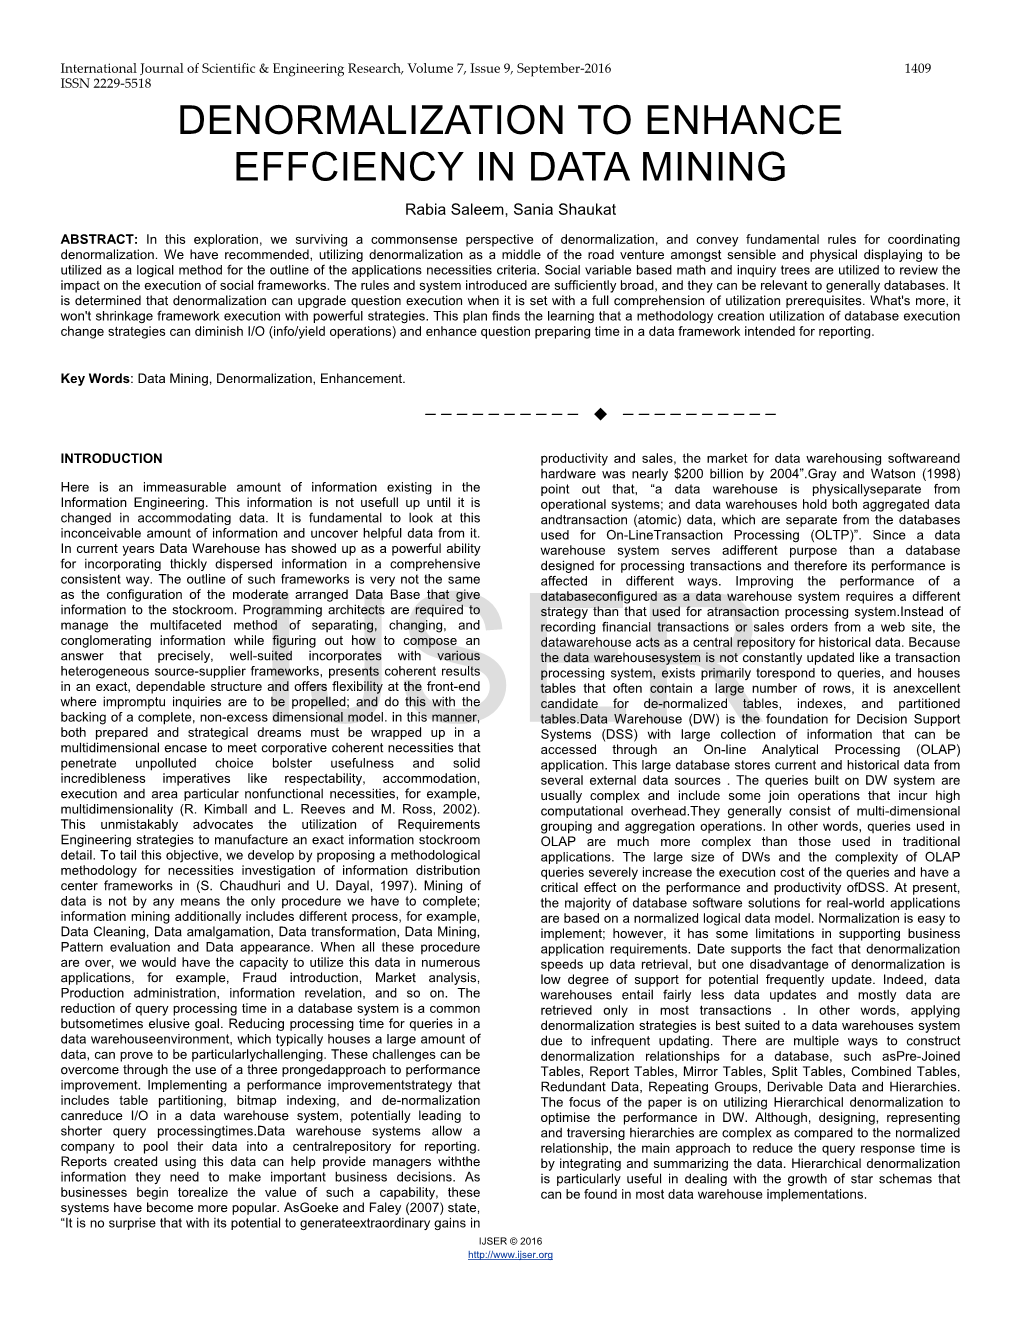 Denormalization to Enhance Effciency in Data Mining